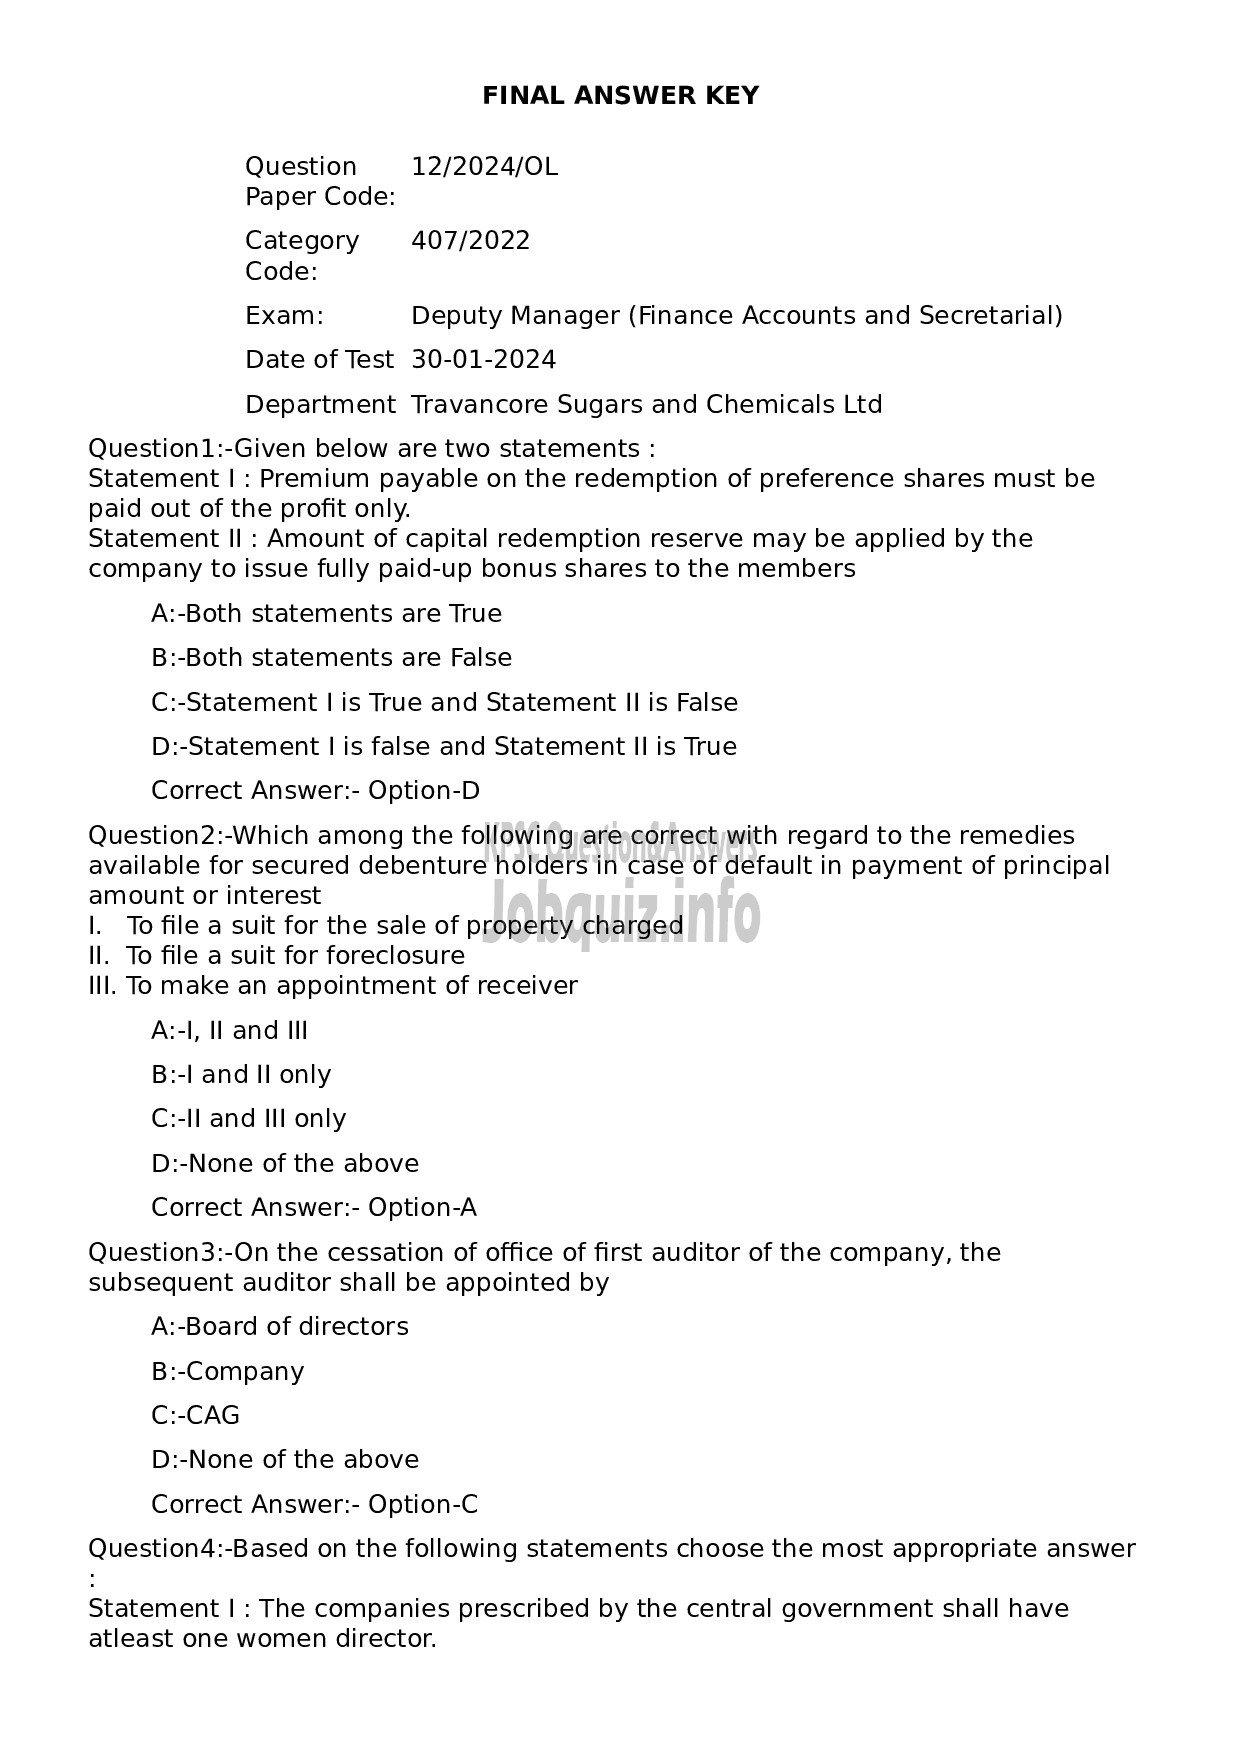 Kerala PSC Question Paper -  Deputy Manager (Finance Accounts and Secretarial)-1